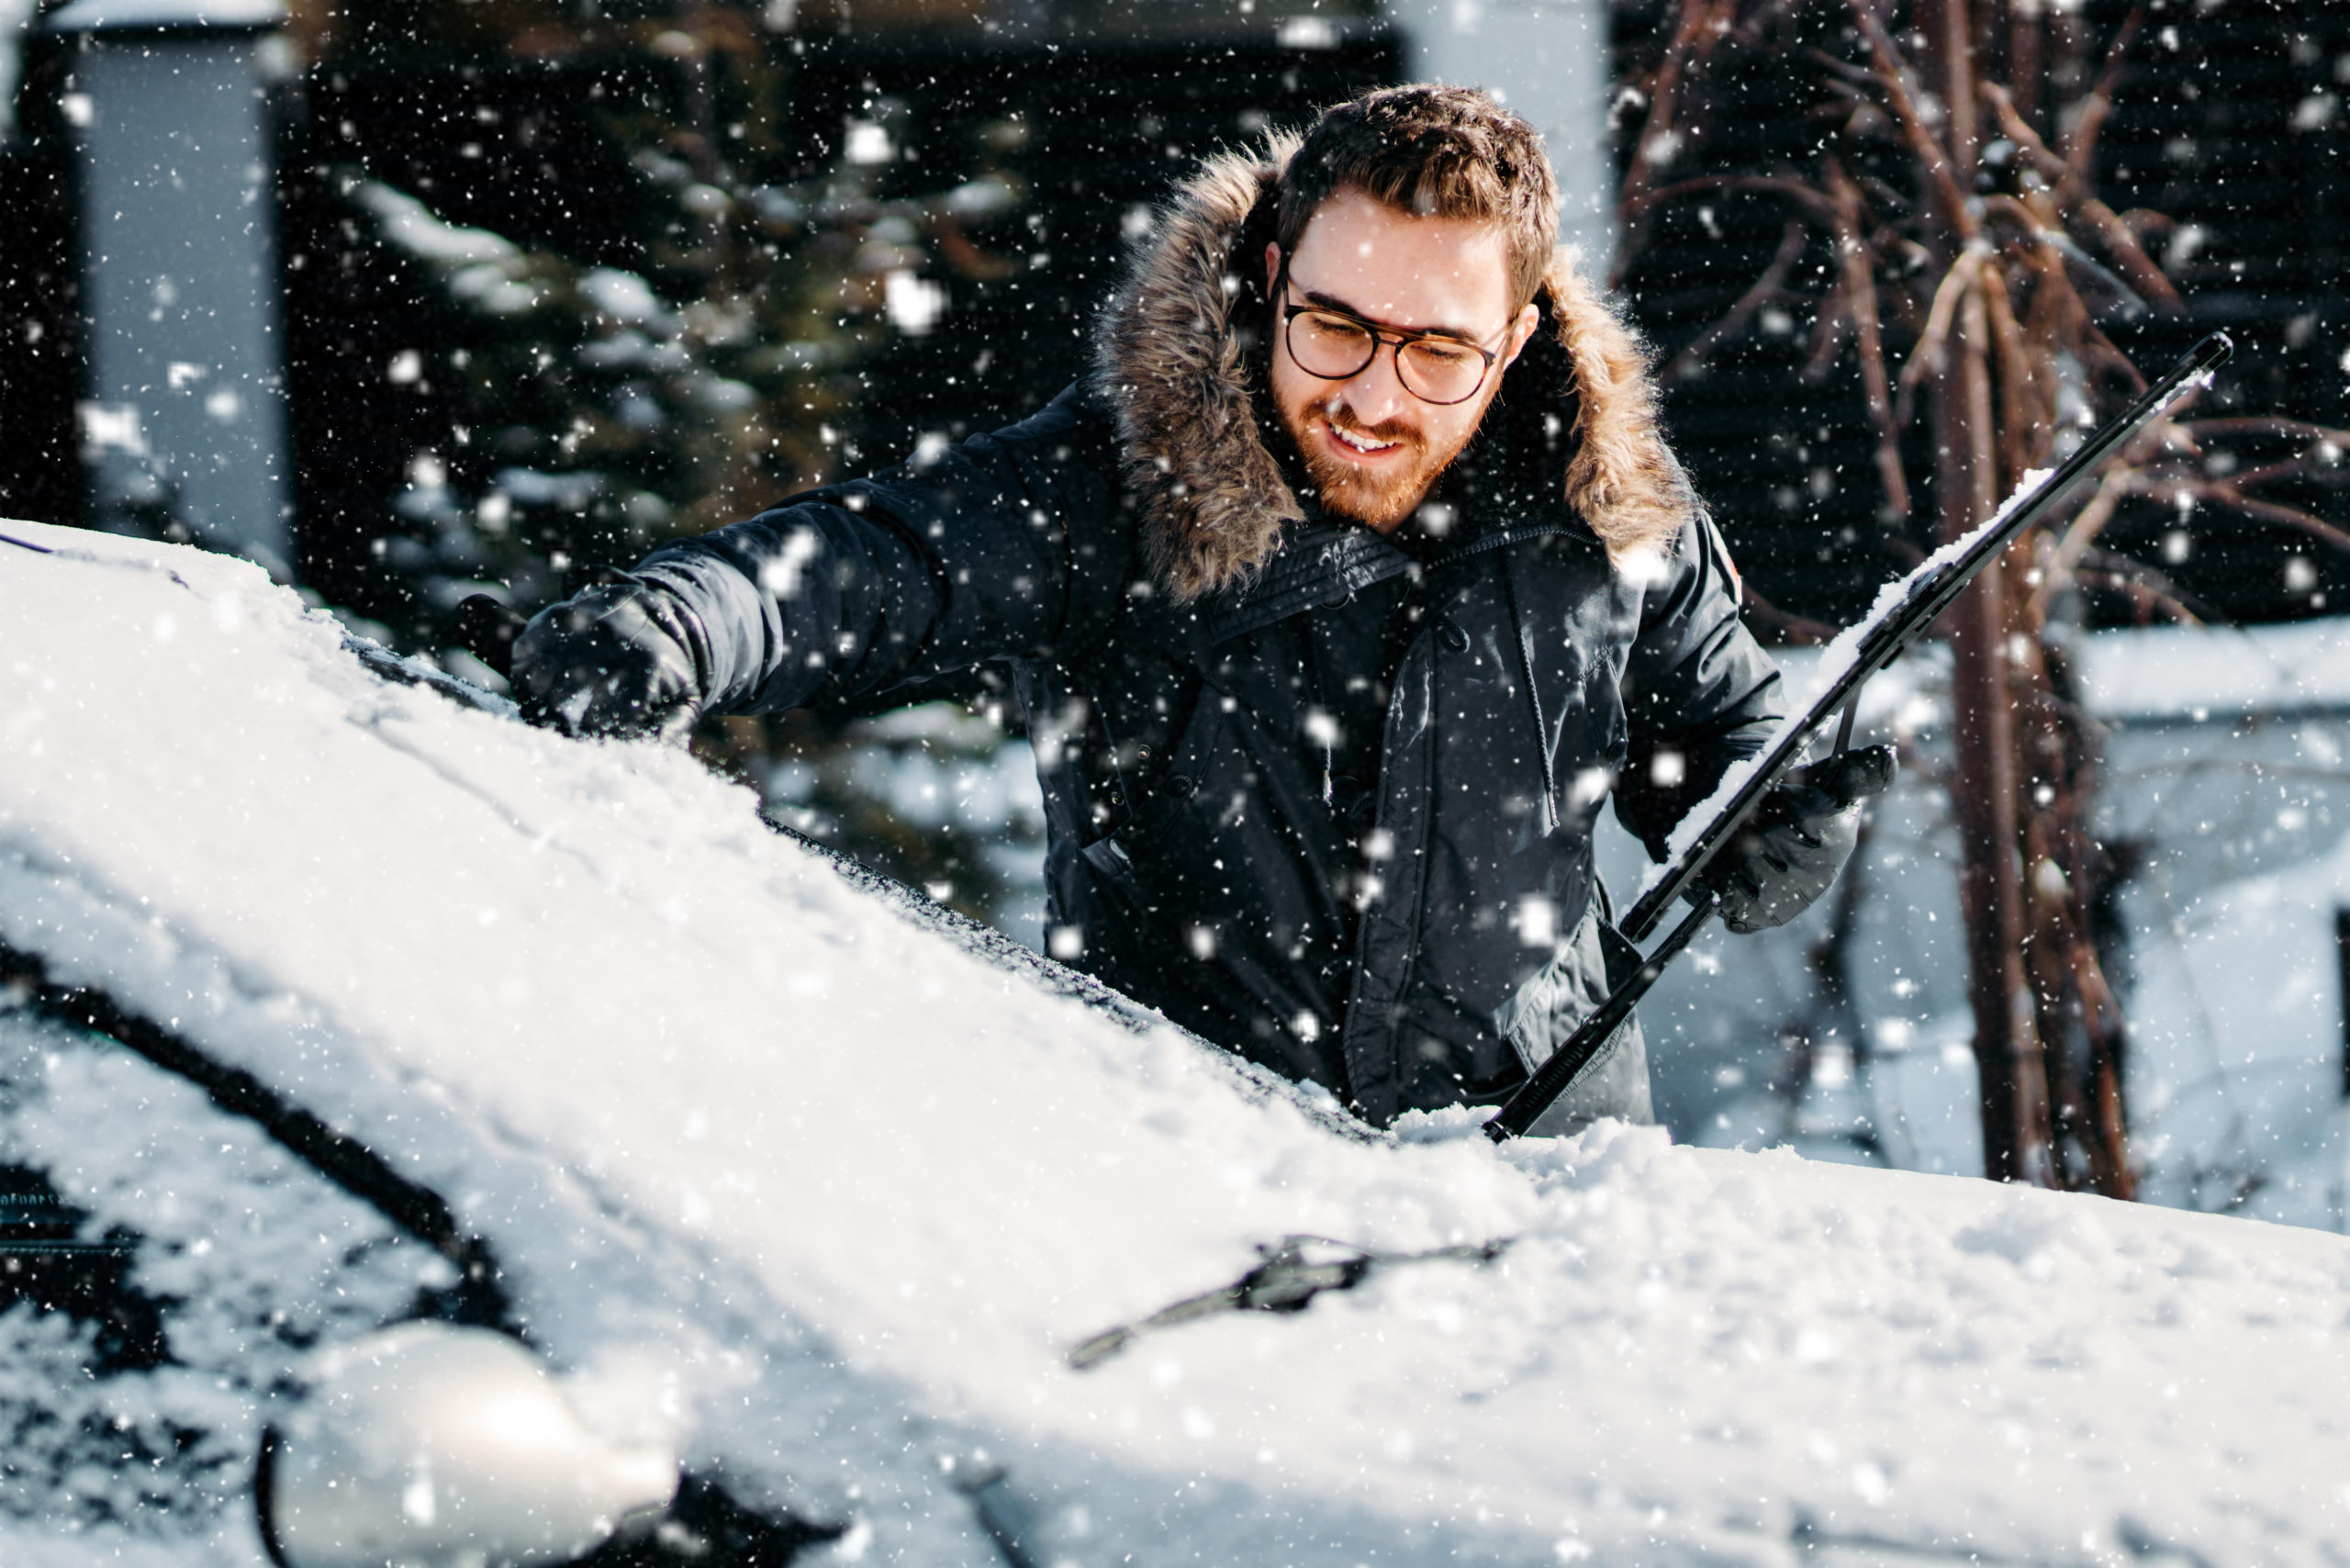 5 Common Winter Auto Repairs